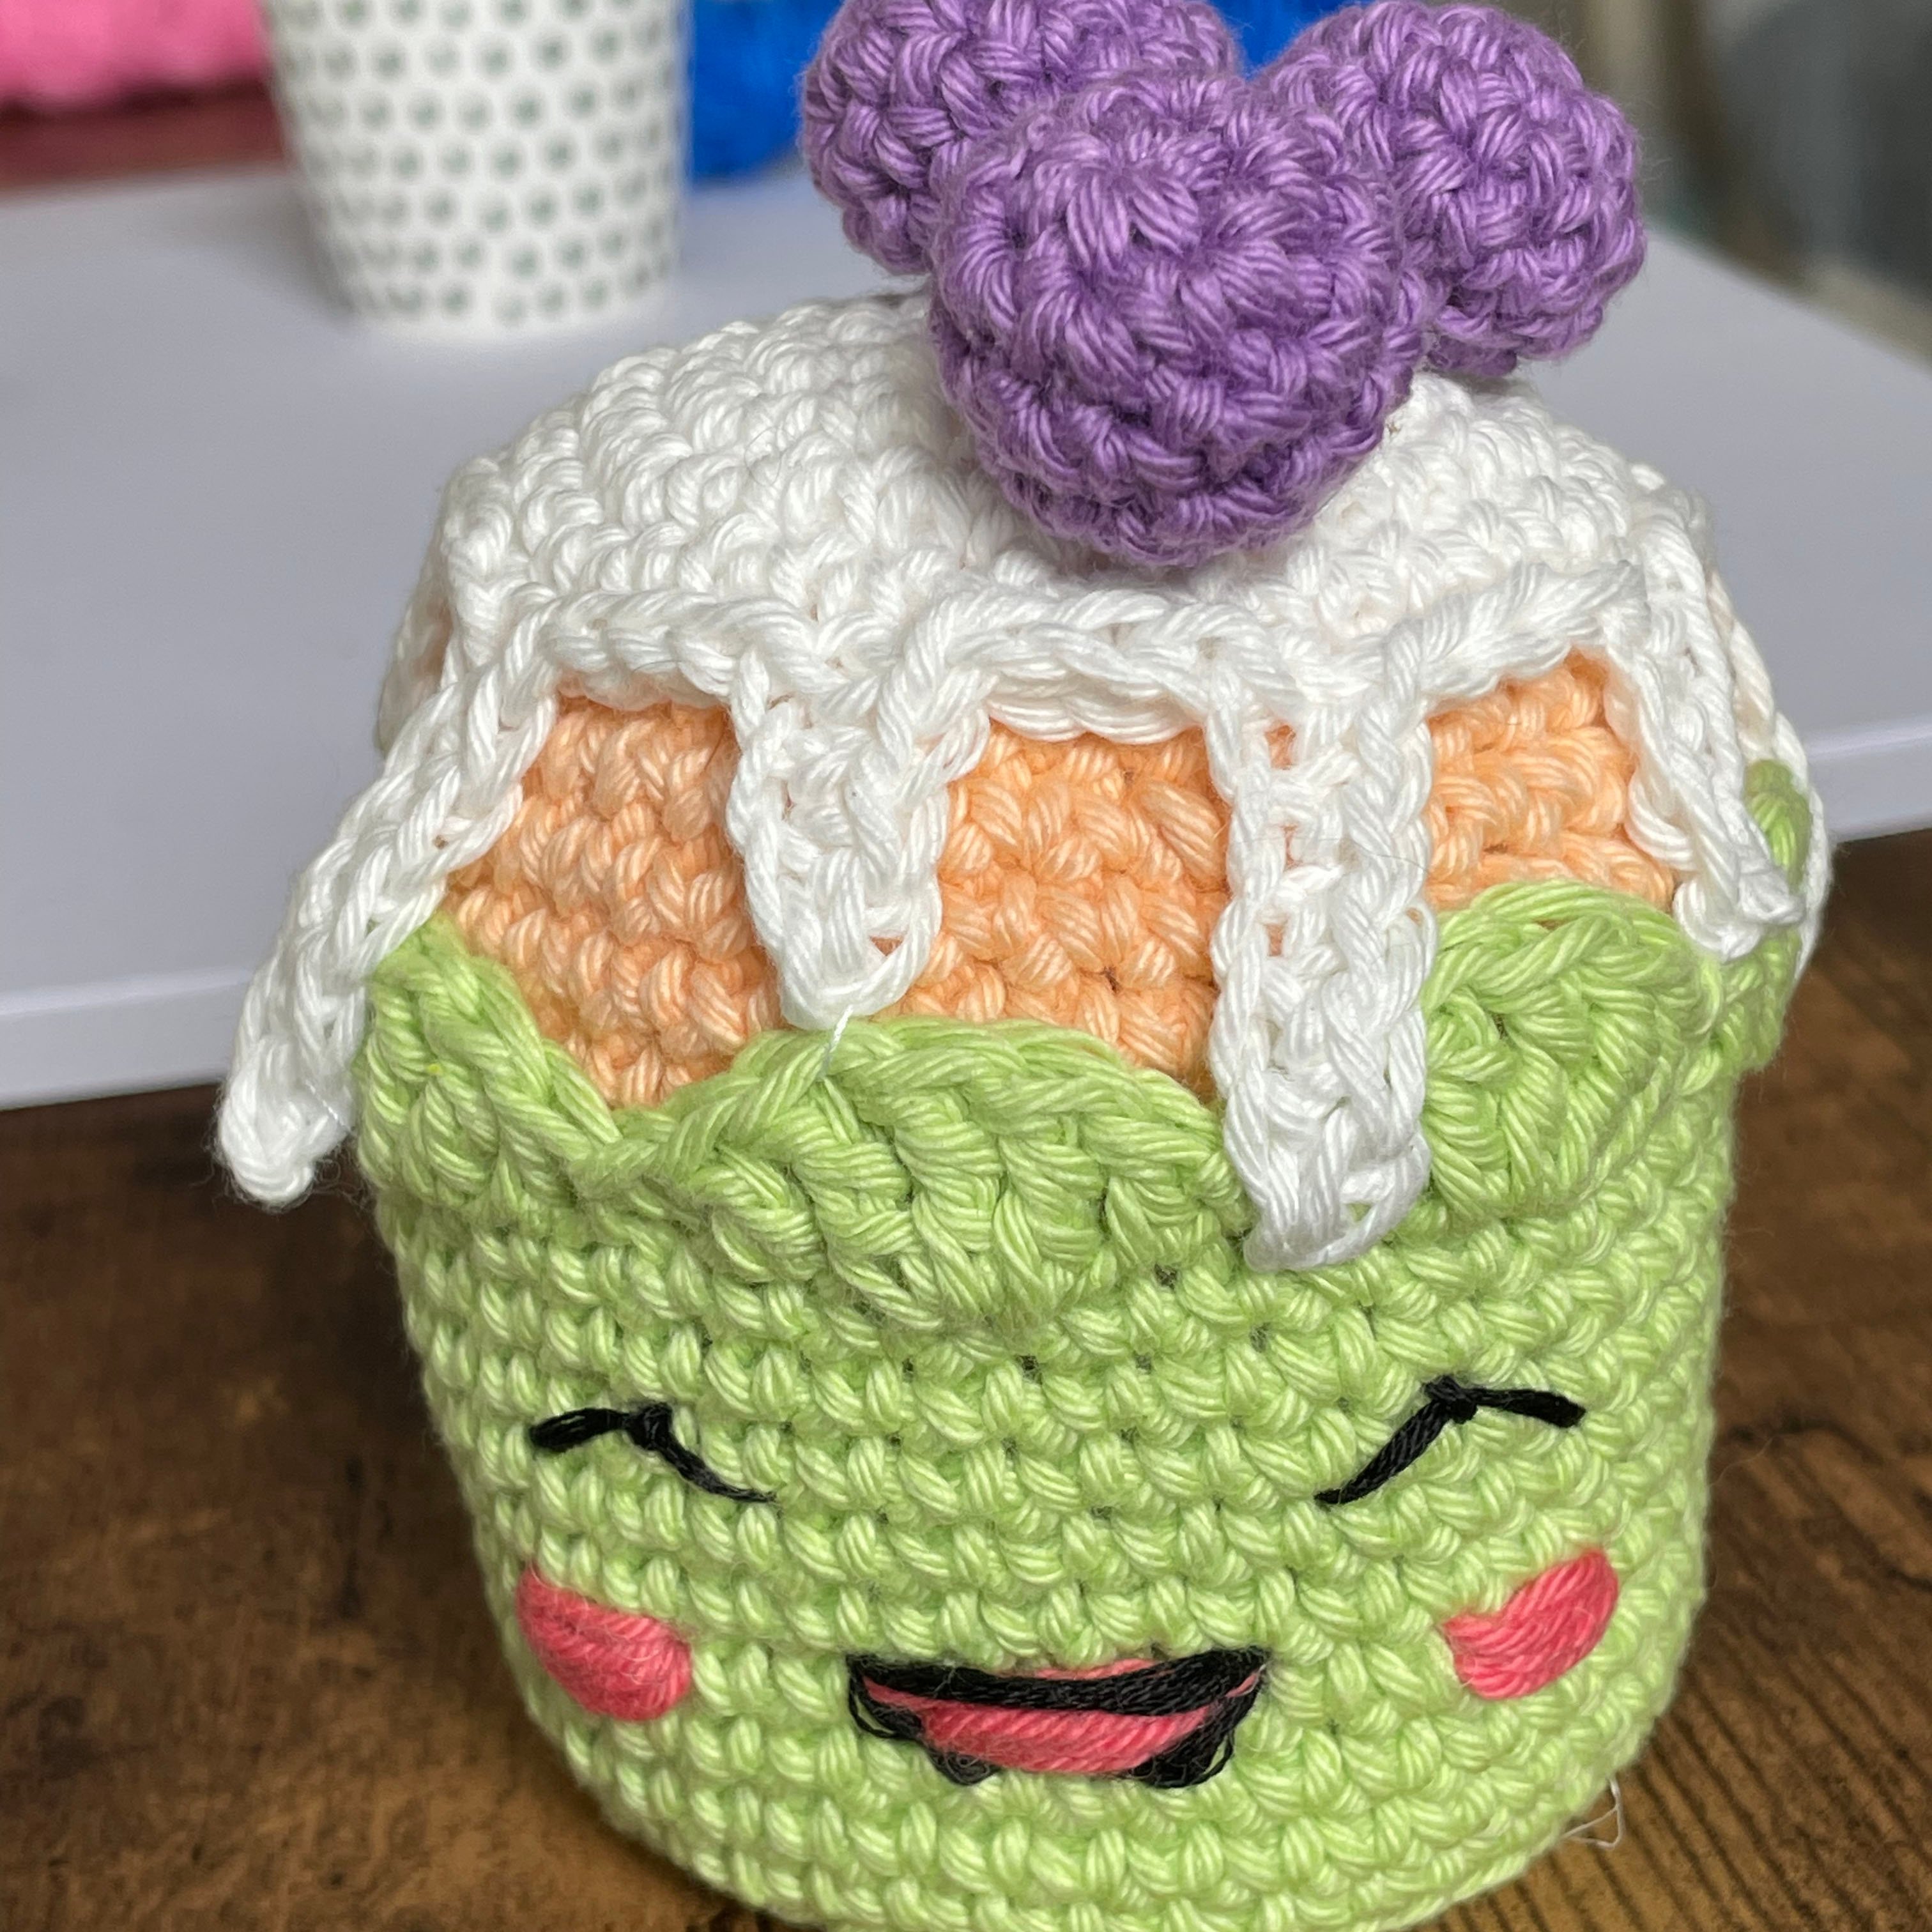 Crochet Kawaii, 19 Amigurumi Crochet Cute Patterns - Payhip